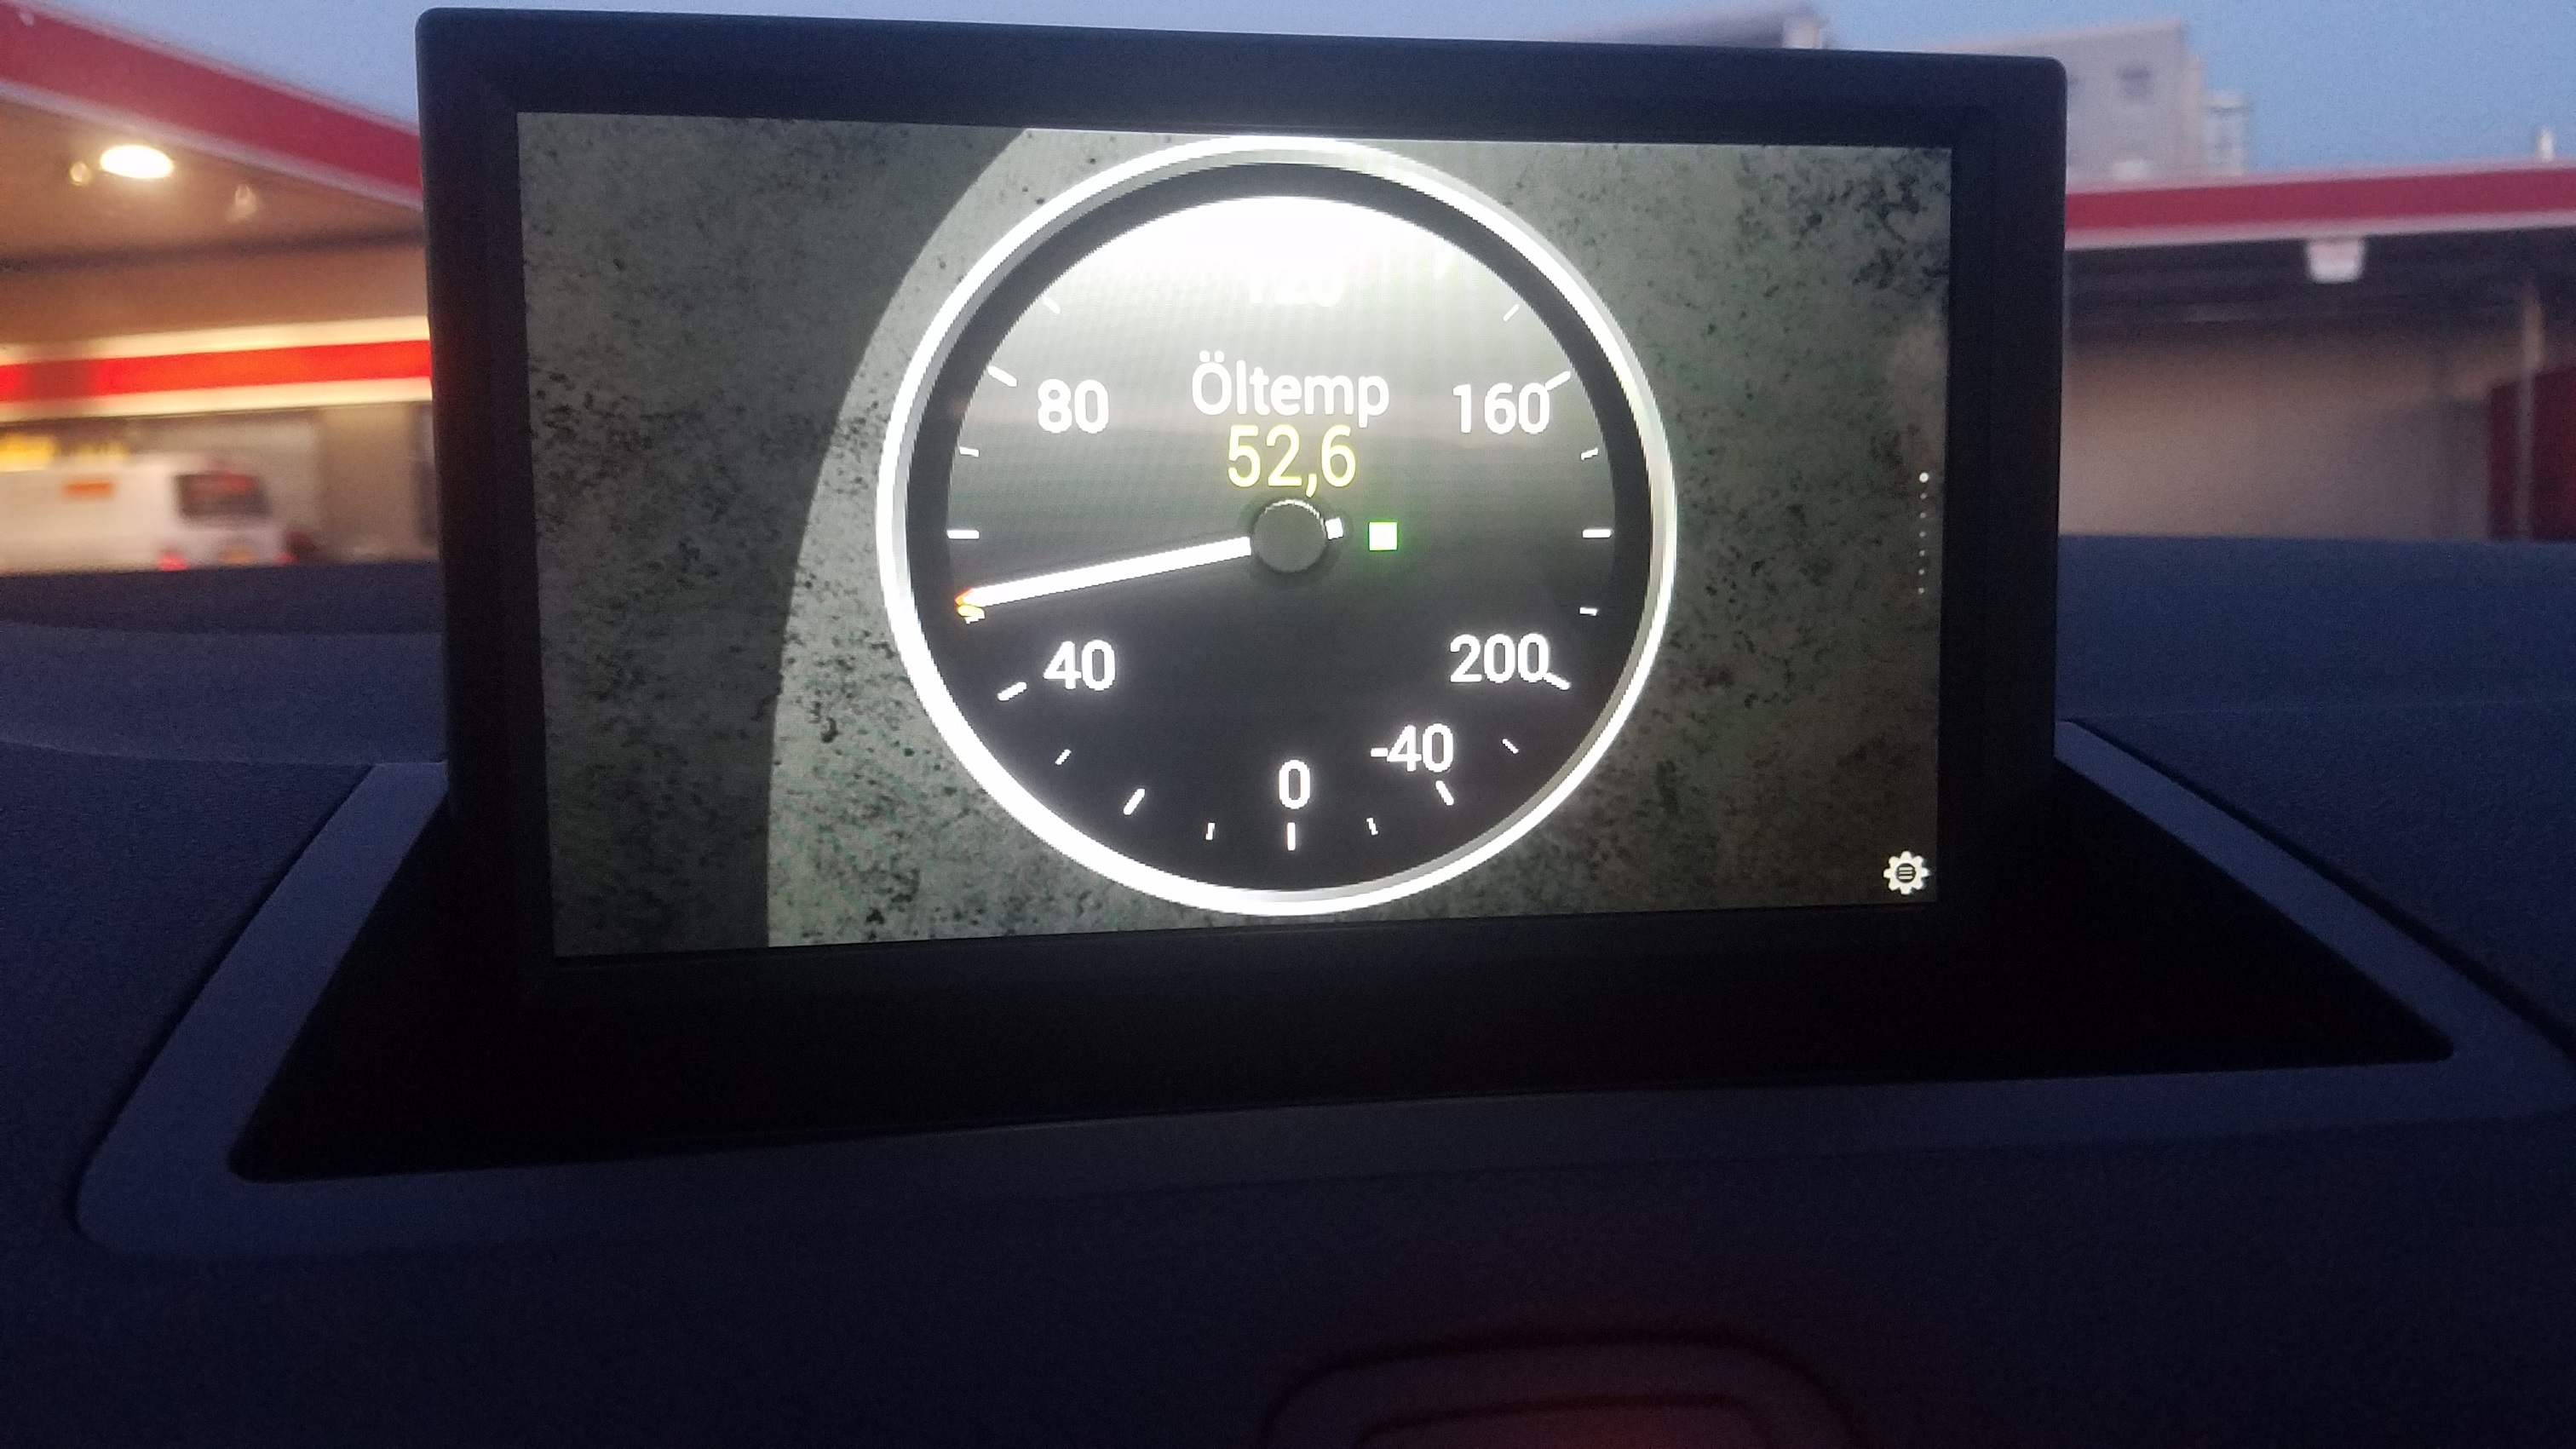 Öltemperatur Audi A1 Torque.jpg